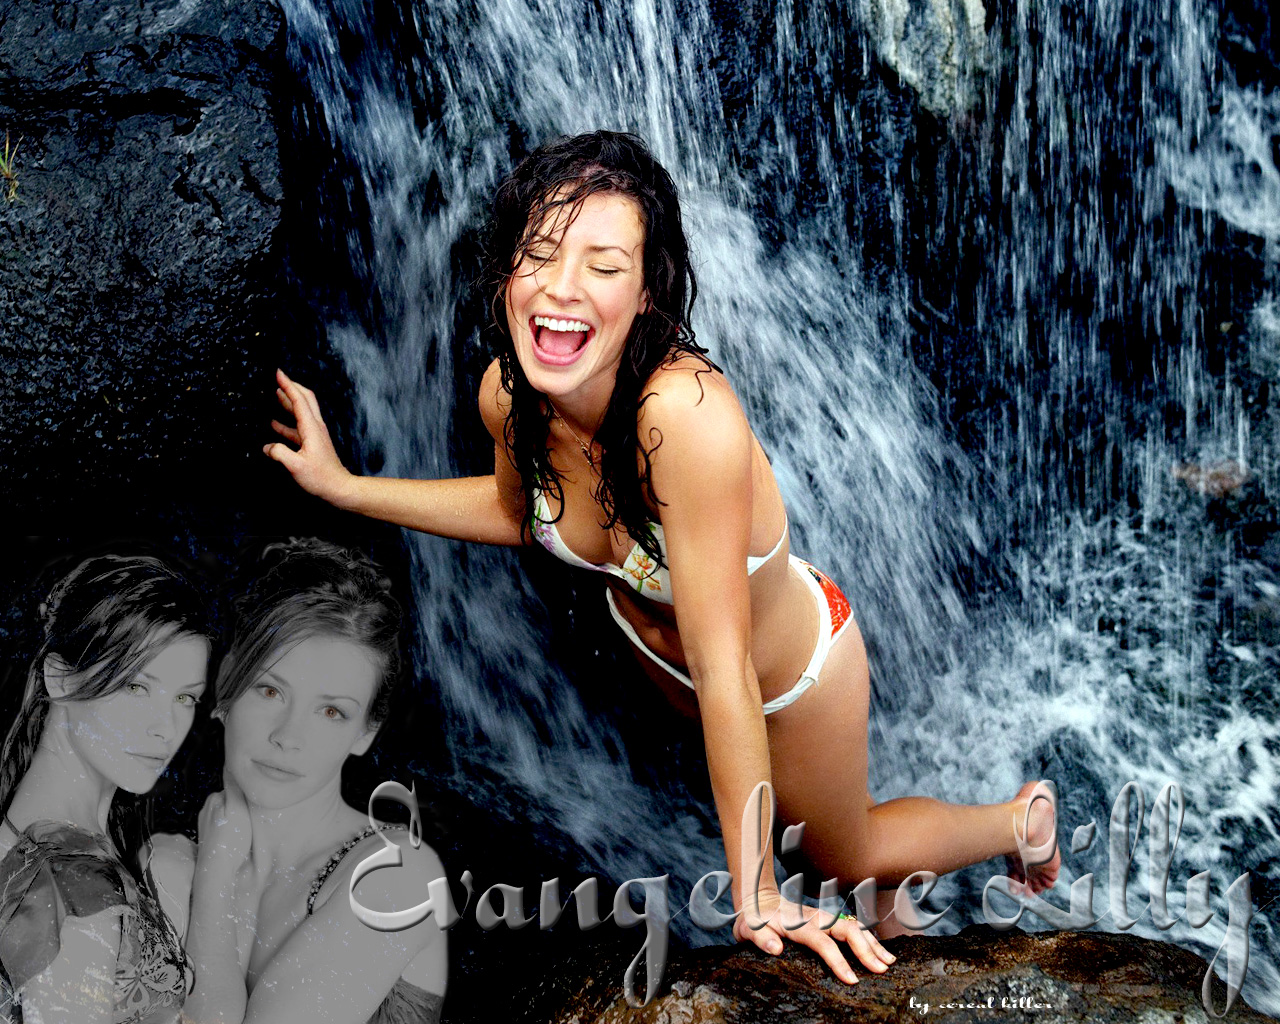 Download full size Evangeline Lilly wallpaper / Celebrities Female / 1280x1024